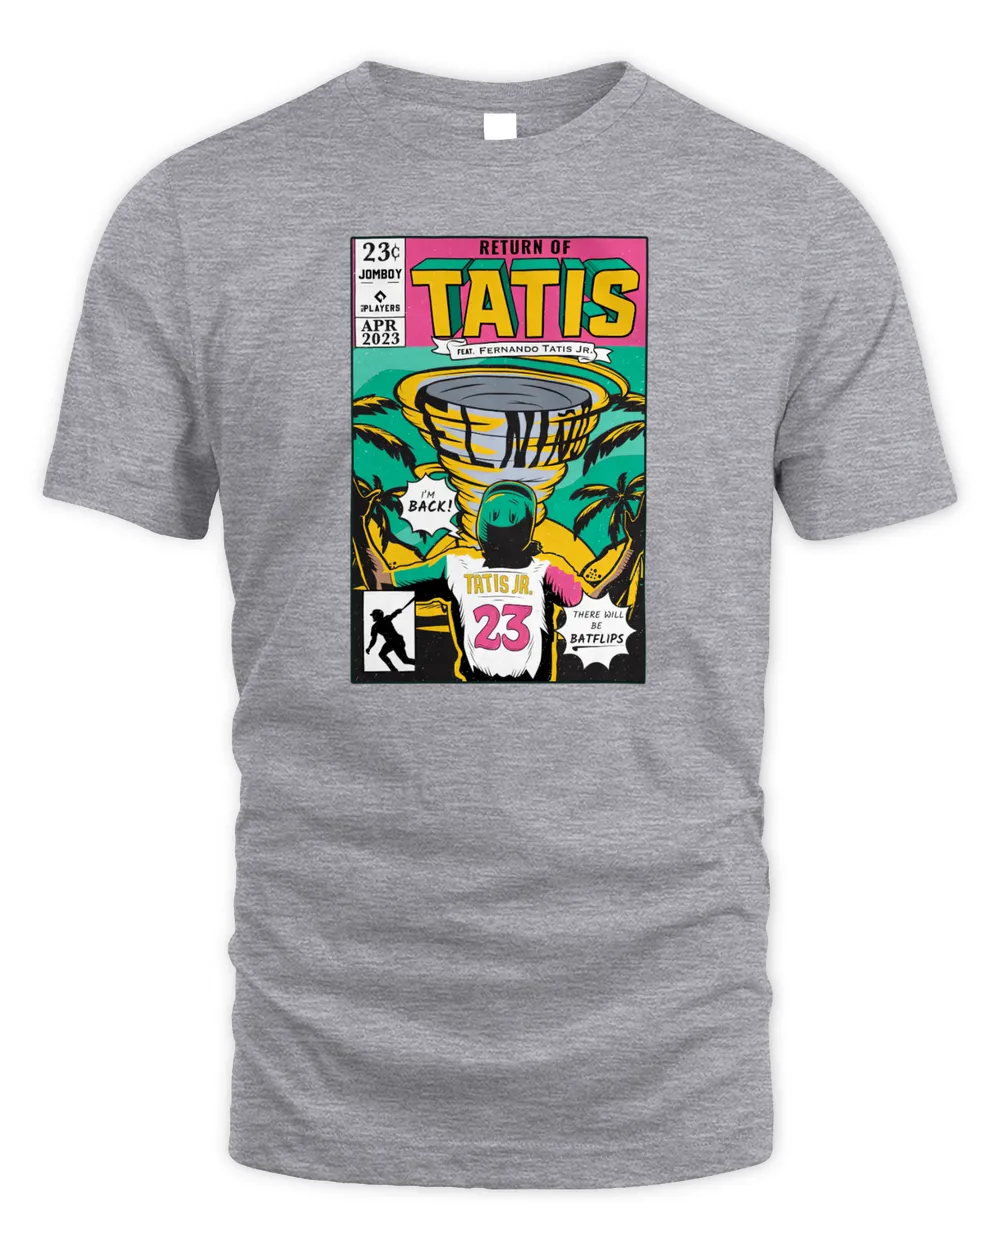 Return Of Tatis Feat Fernando Tatis Jr Shirt